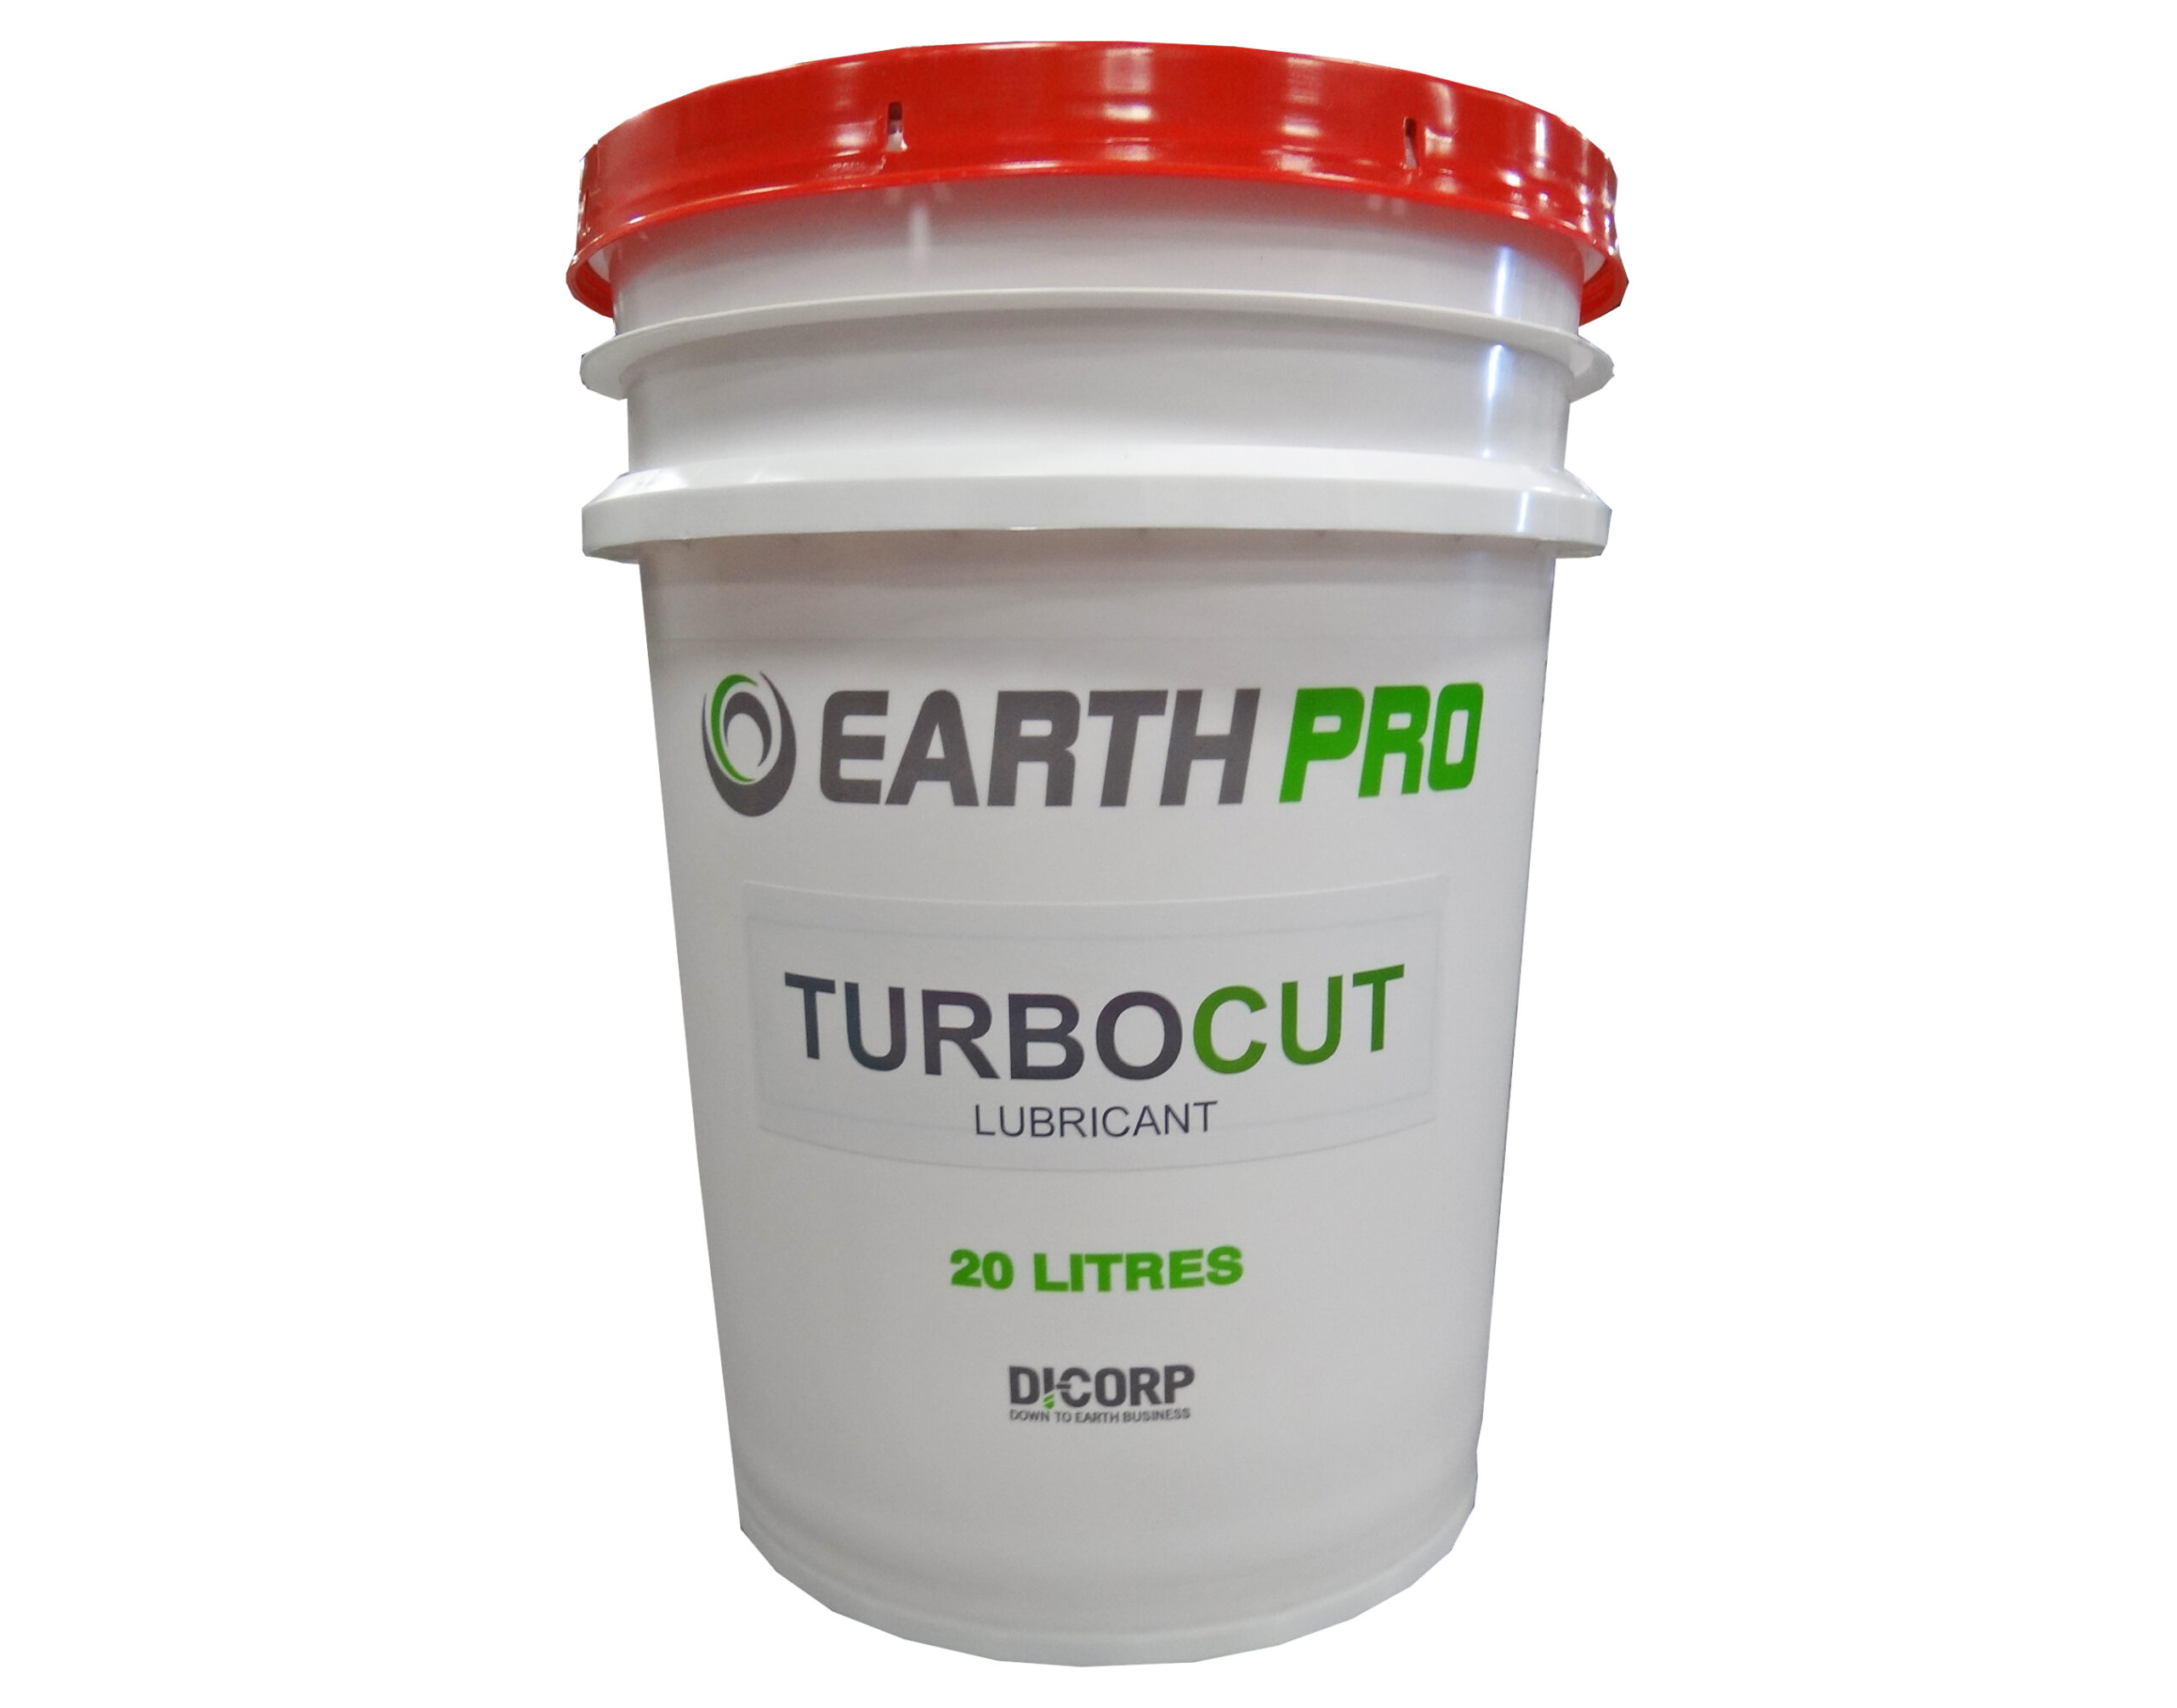 A tub of Earth Pro TurboCut. The tub says: “EarthPro TURBOCUT LUBRICANT, 20 LITRES. Di-Corp”